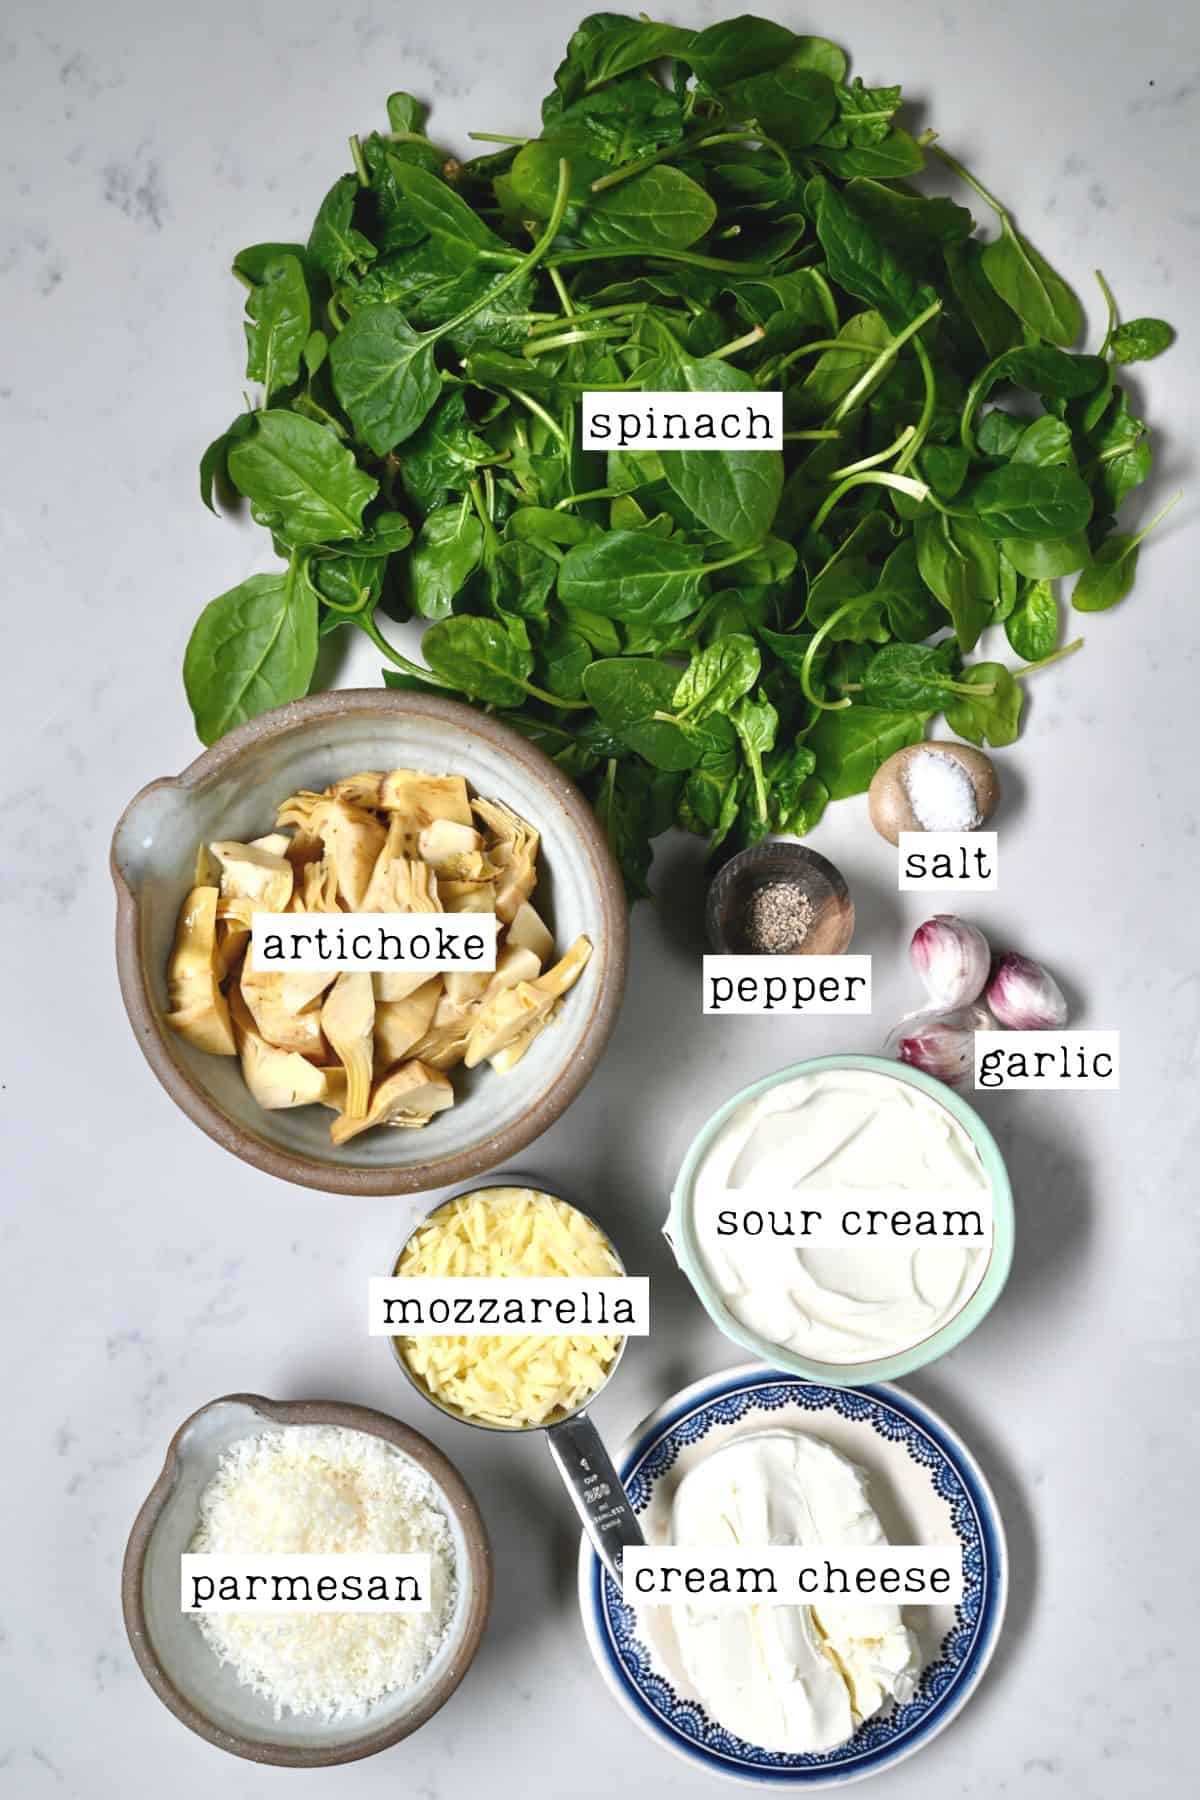 Ingredients for crockpot spinach artichoke dip